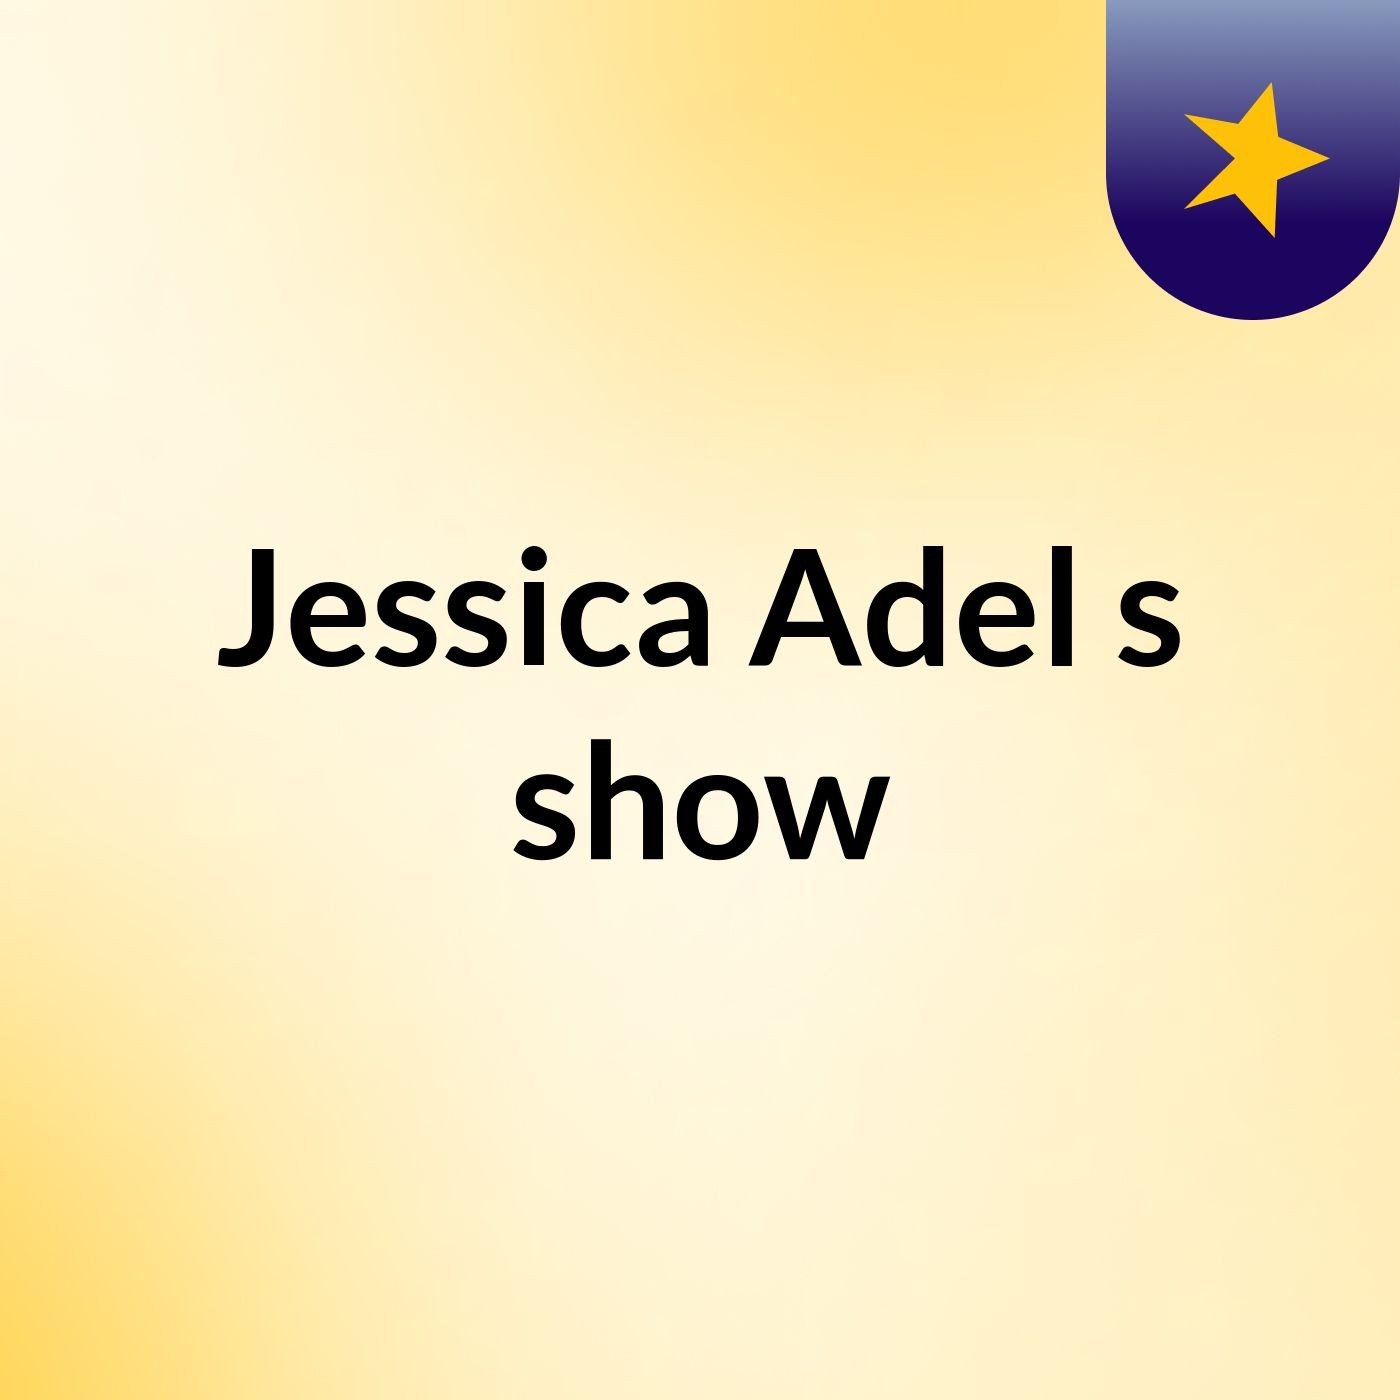 Jessica Adel's show